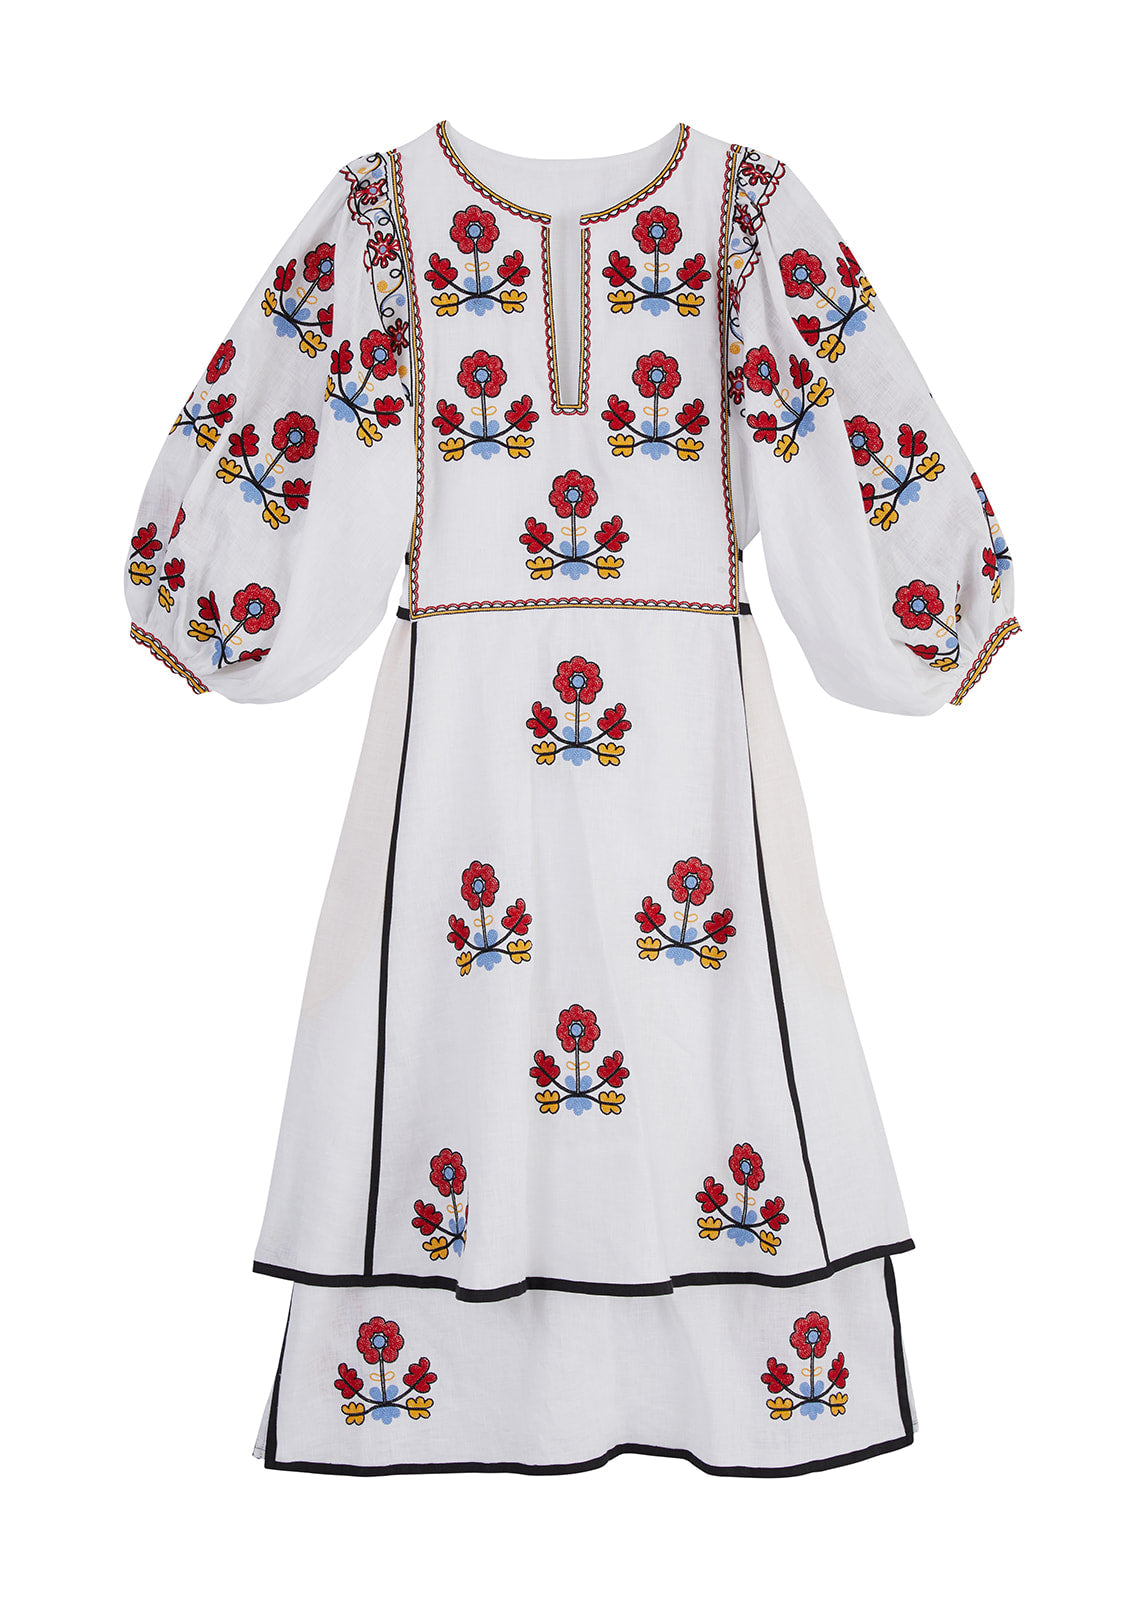 Iryna Embroidered Ukrainian Dress - White, Red, Yellow, Blue by Larkin Lane